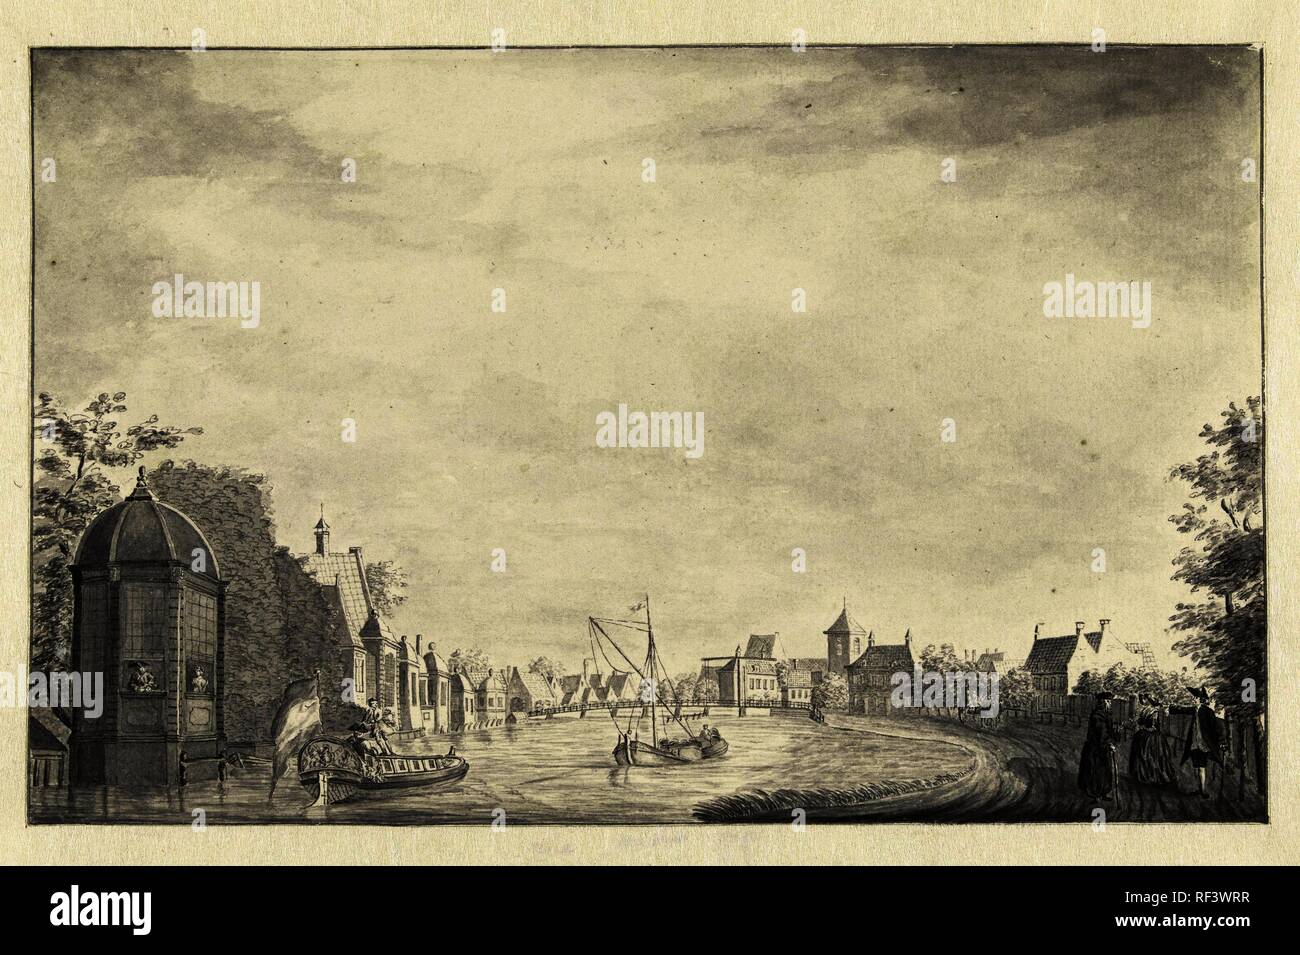 Ouderkerk aan de Amstel. Draughtsman: Jan de Beijer (possibly). Dating: 1756. Measurements: h 155 mm × w 245 mm. Museum: Rijksmuseum, Amsterdam. Stock Photo